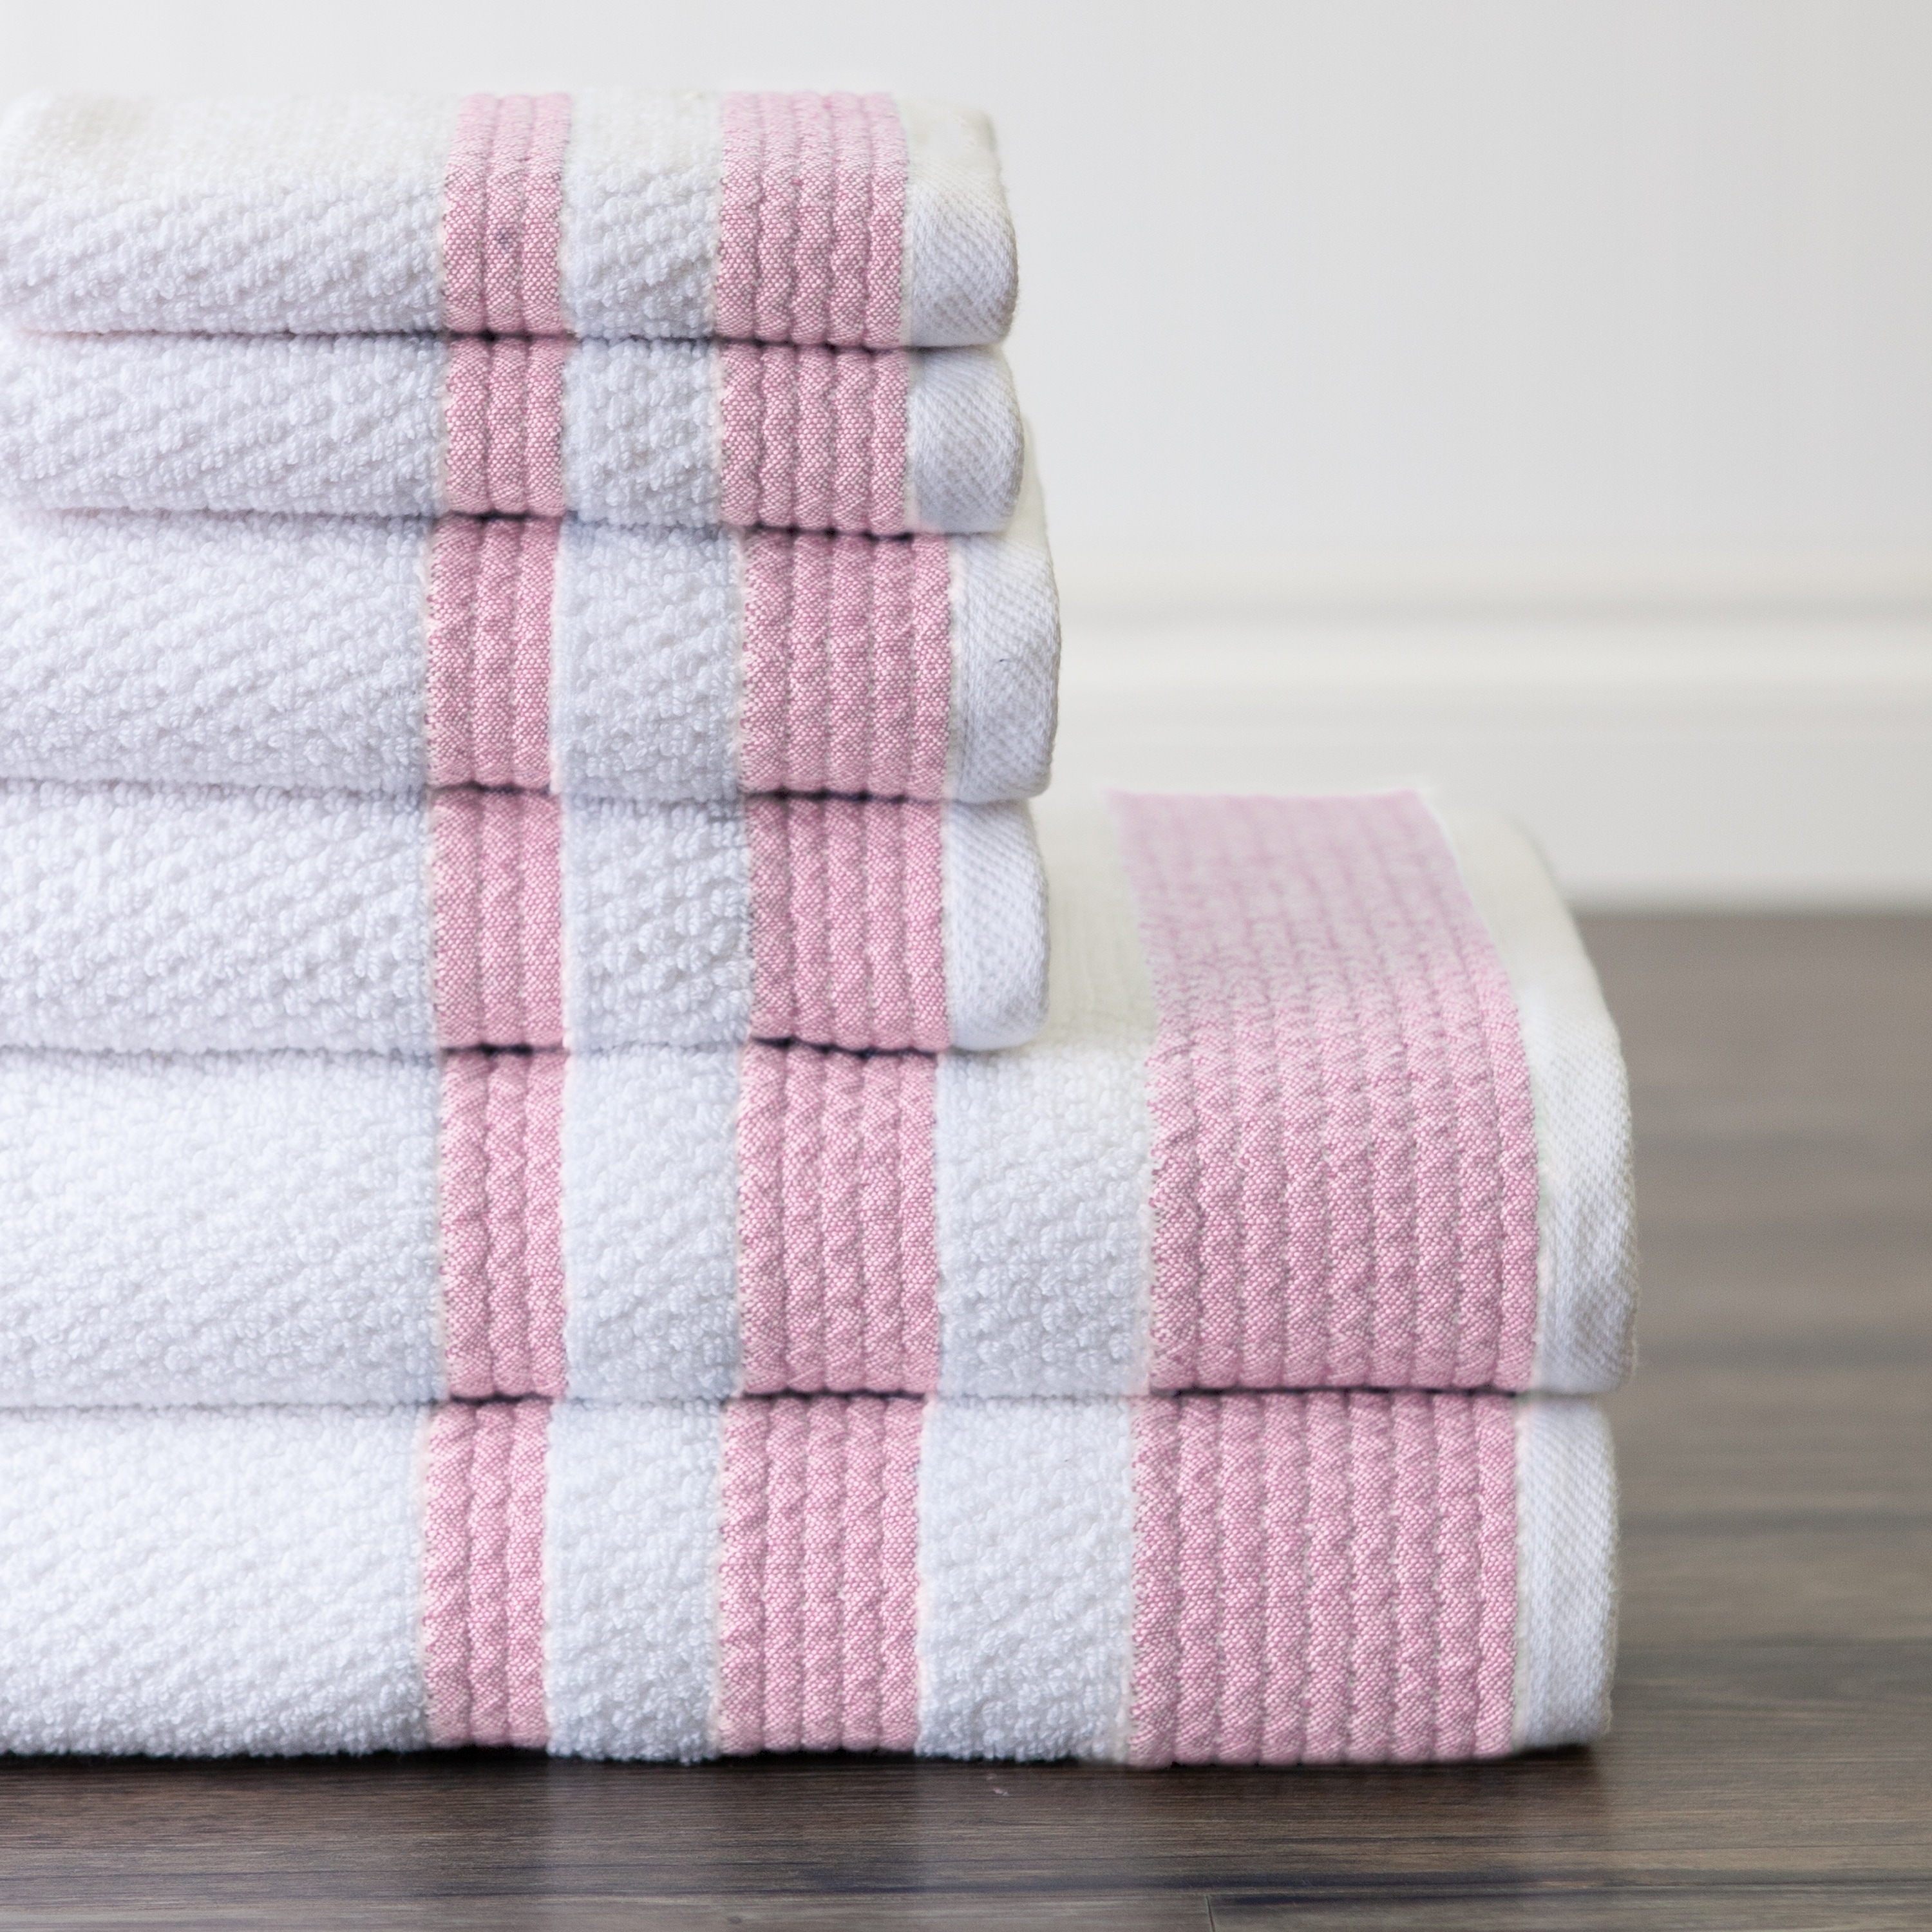 OXFORD RESERVE HOTEL RESORT Bath Towels 30x60 White